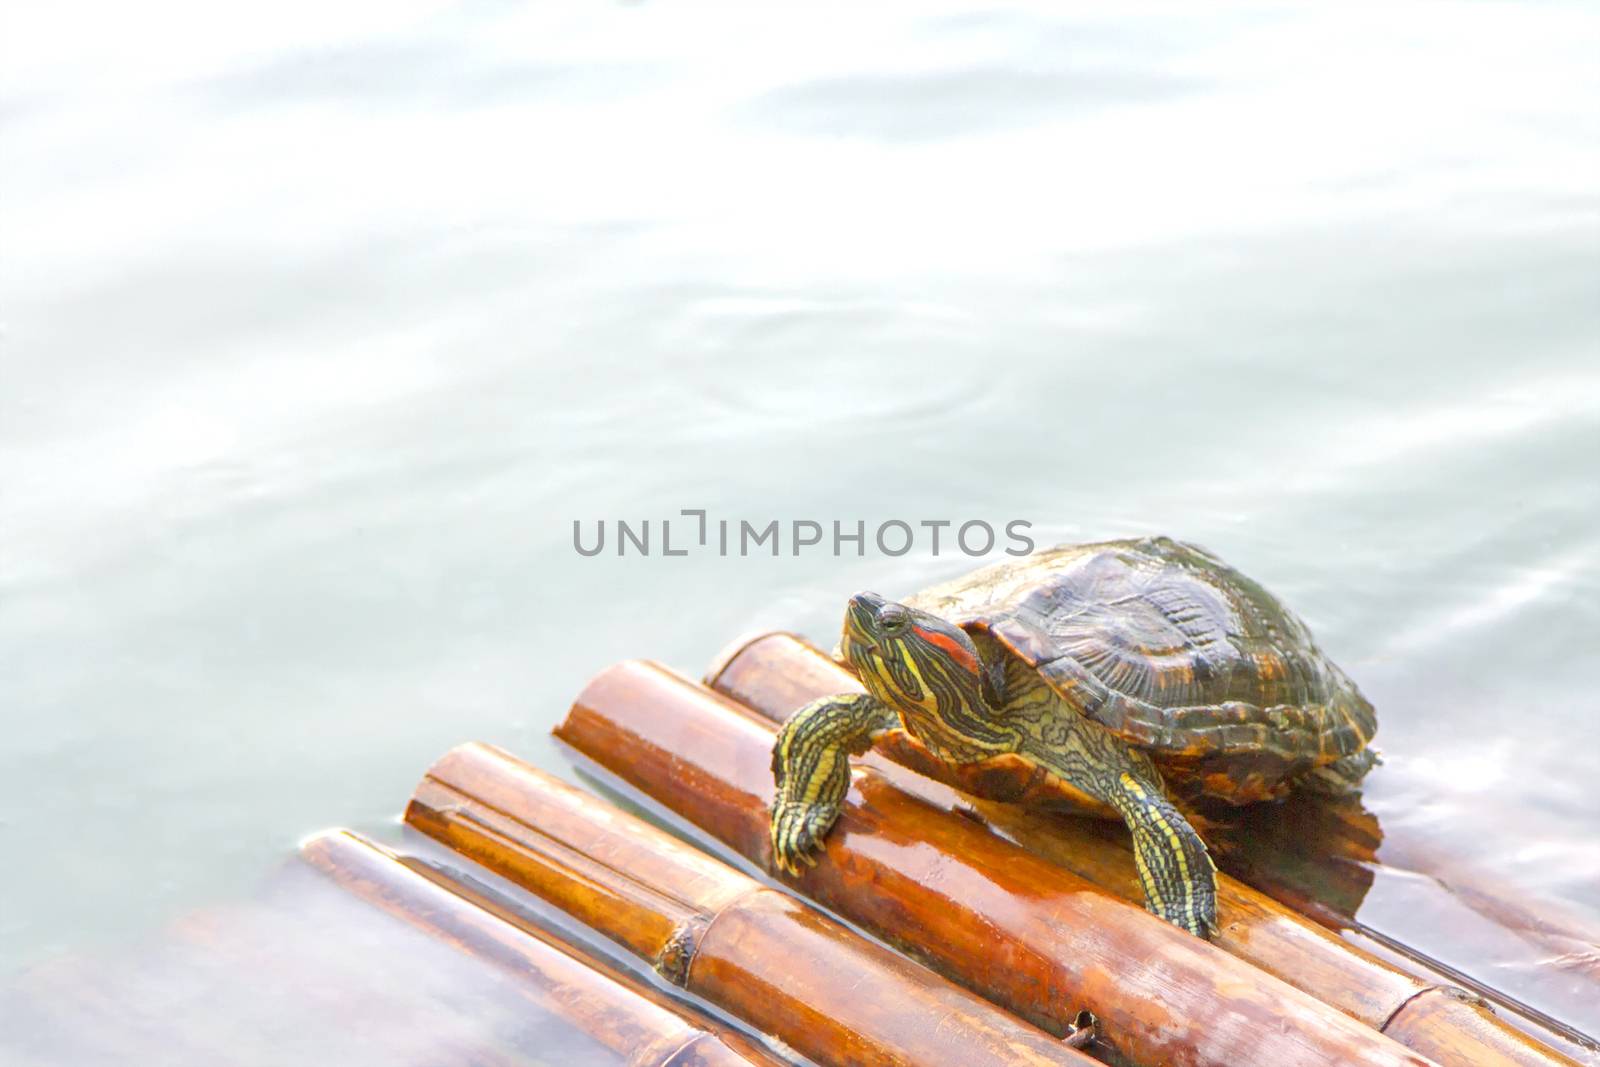 One turtle on bamboo raft in water by TakerWalker